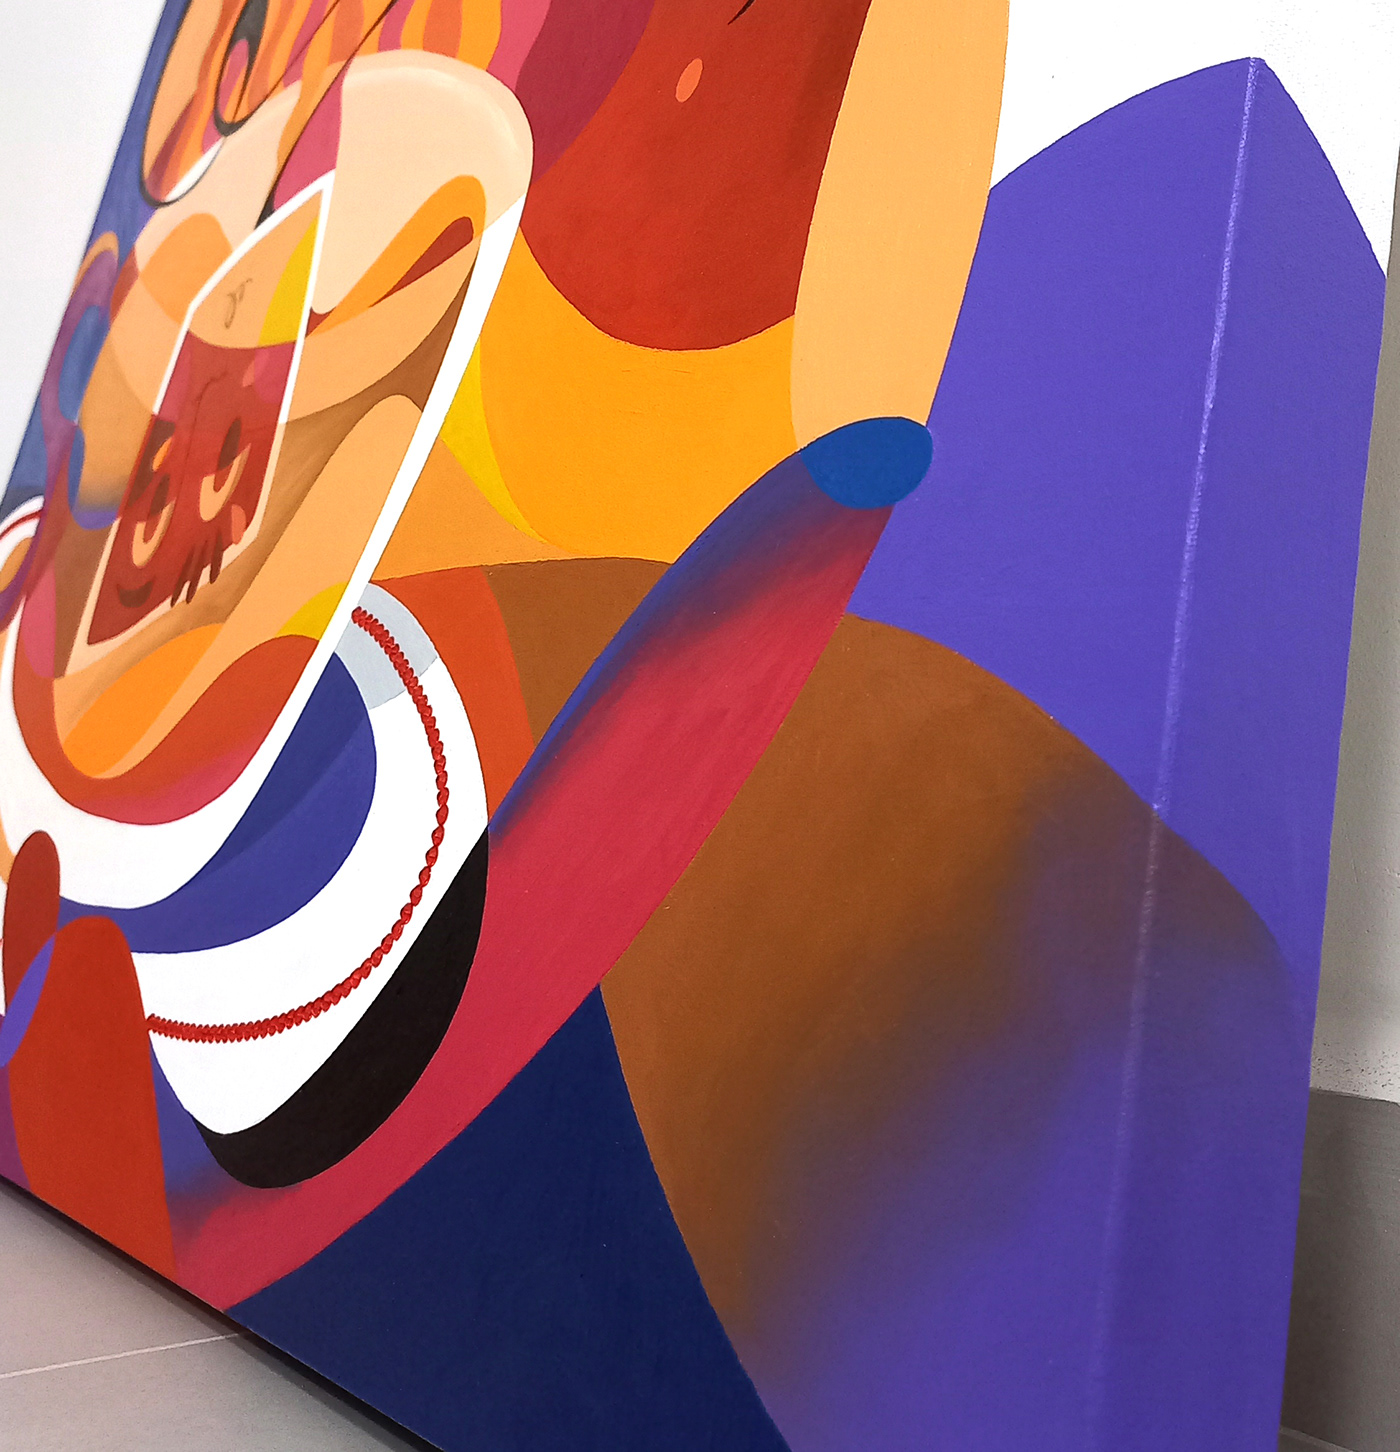 acrylic painting artwork colors hand Cover Art kidlit McDonalds google New York Times new yorker